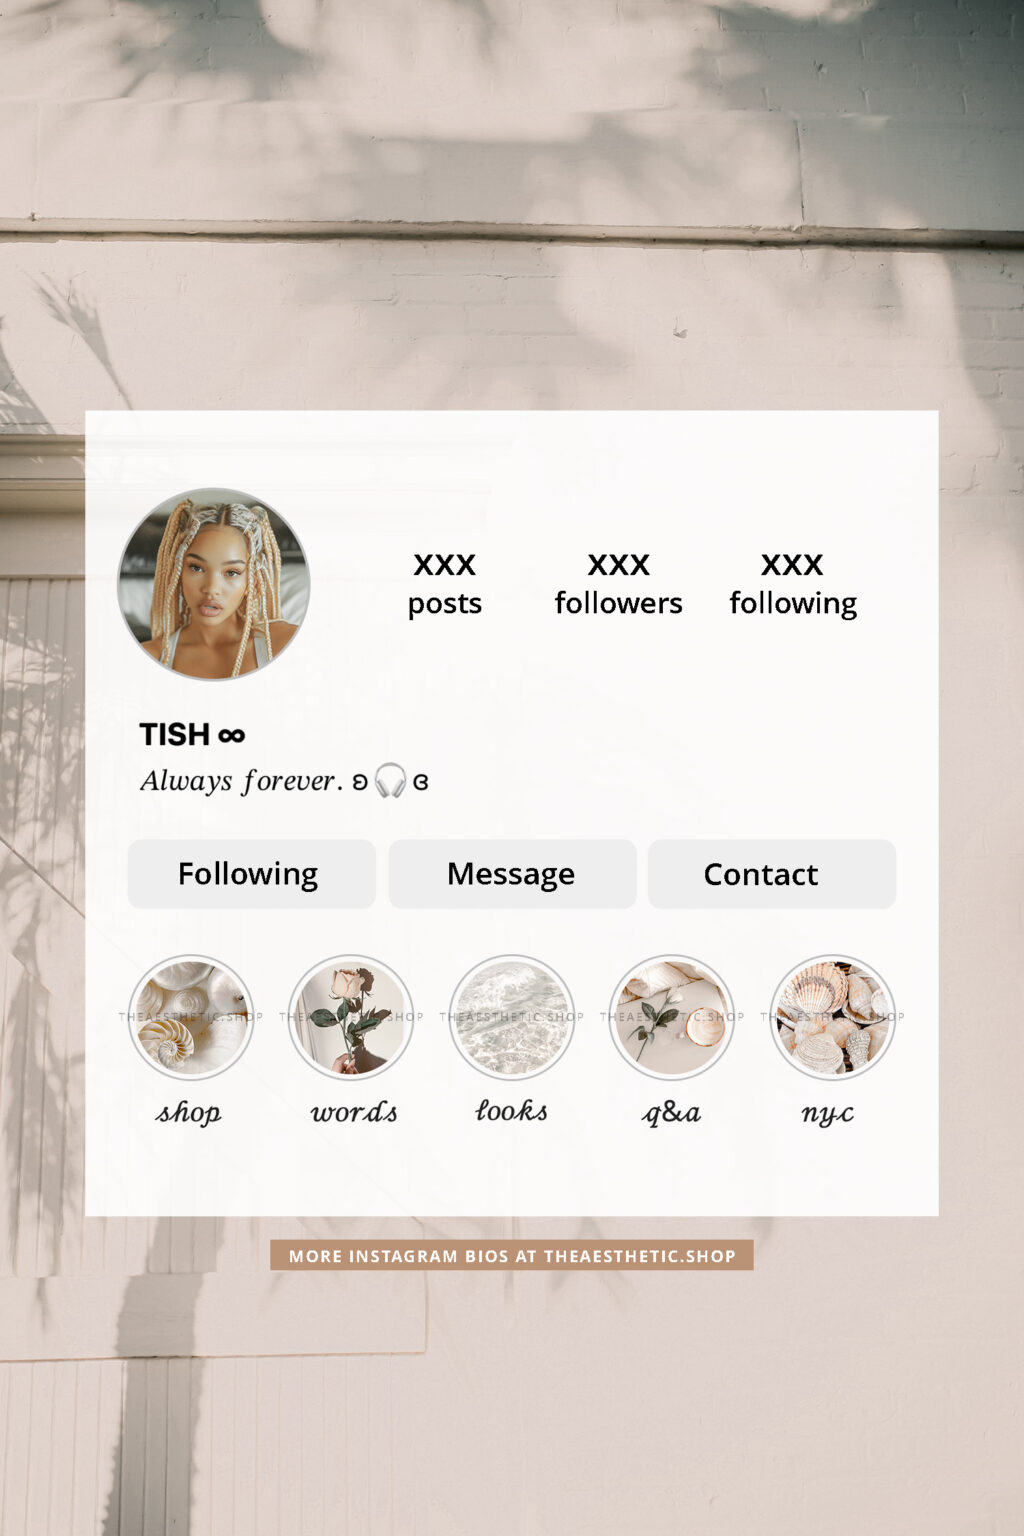 Aesthetic Instagram bio ideas copy/paste – part 5: vanilla girl ...